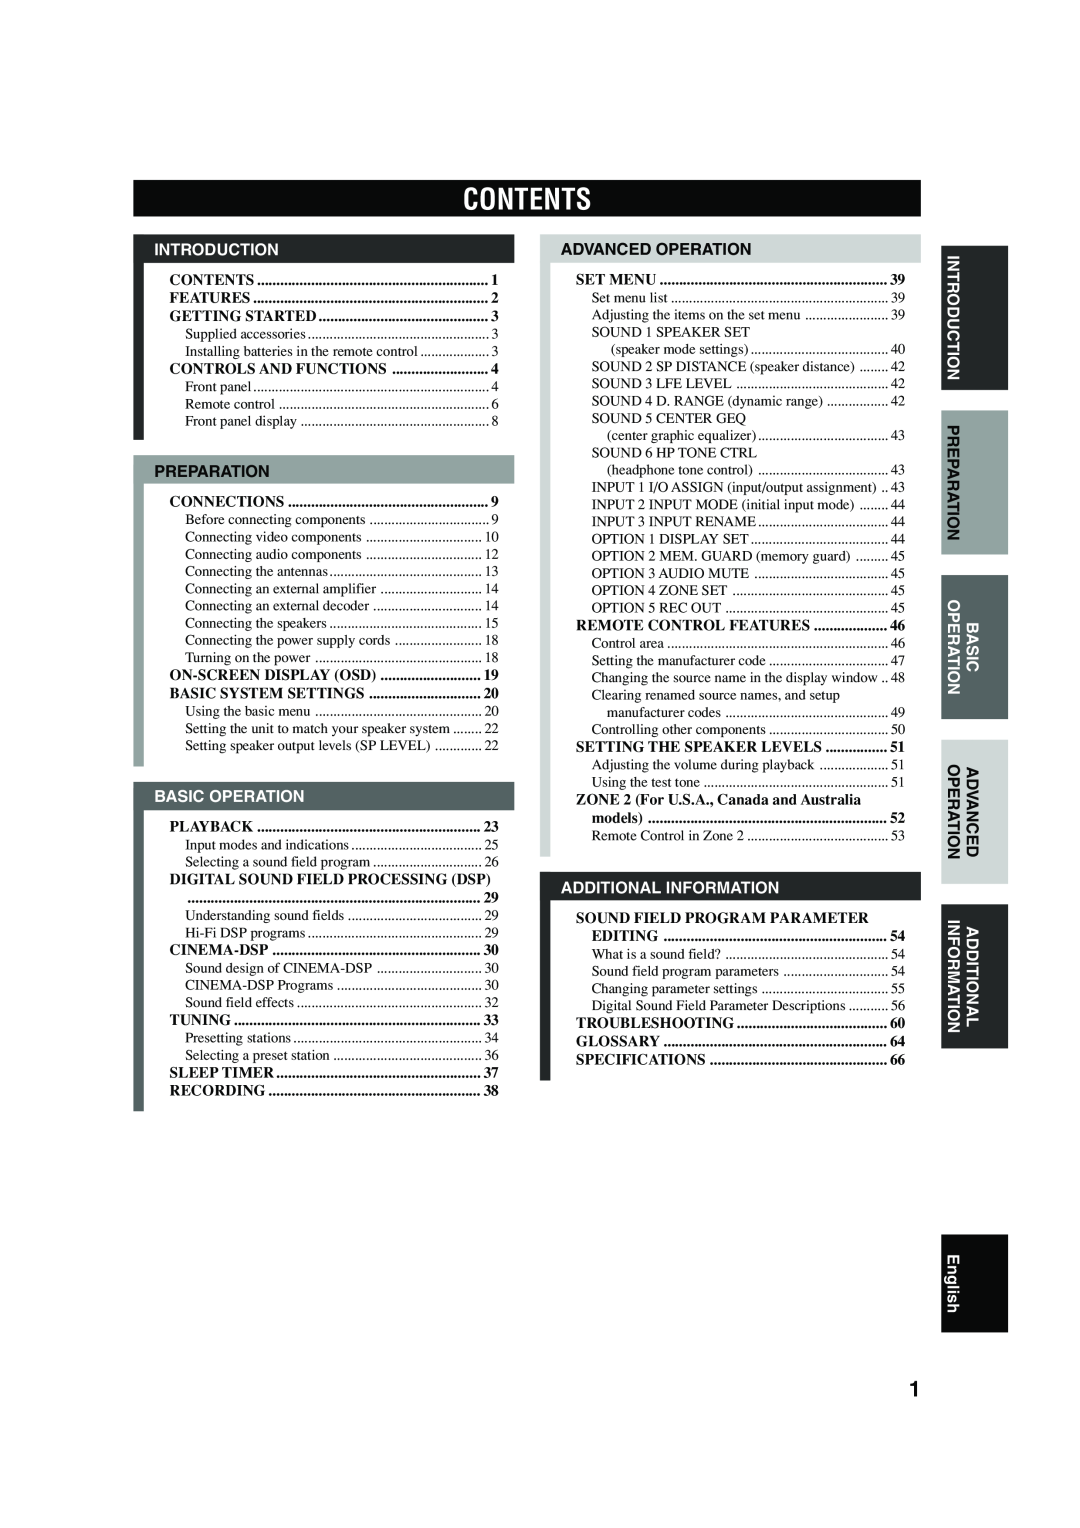 Yamaha RX-V740 owner manual Contents, Introduction, Basic Operation, Additional Information, English 